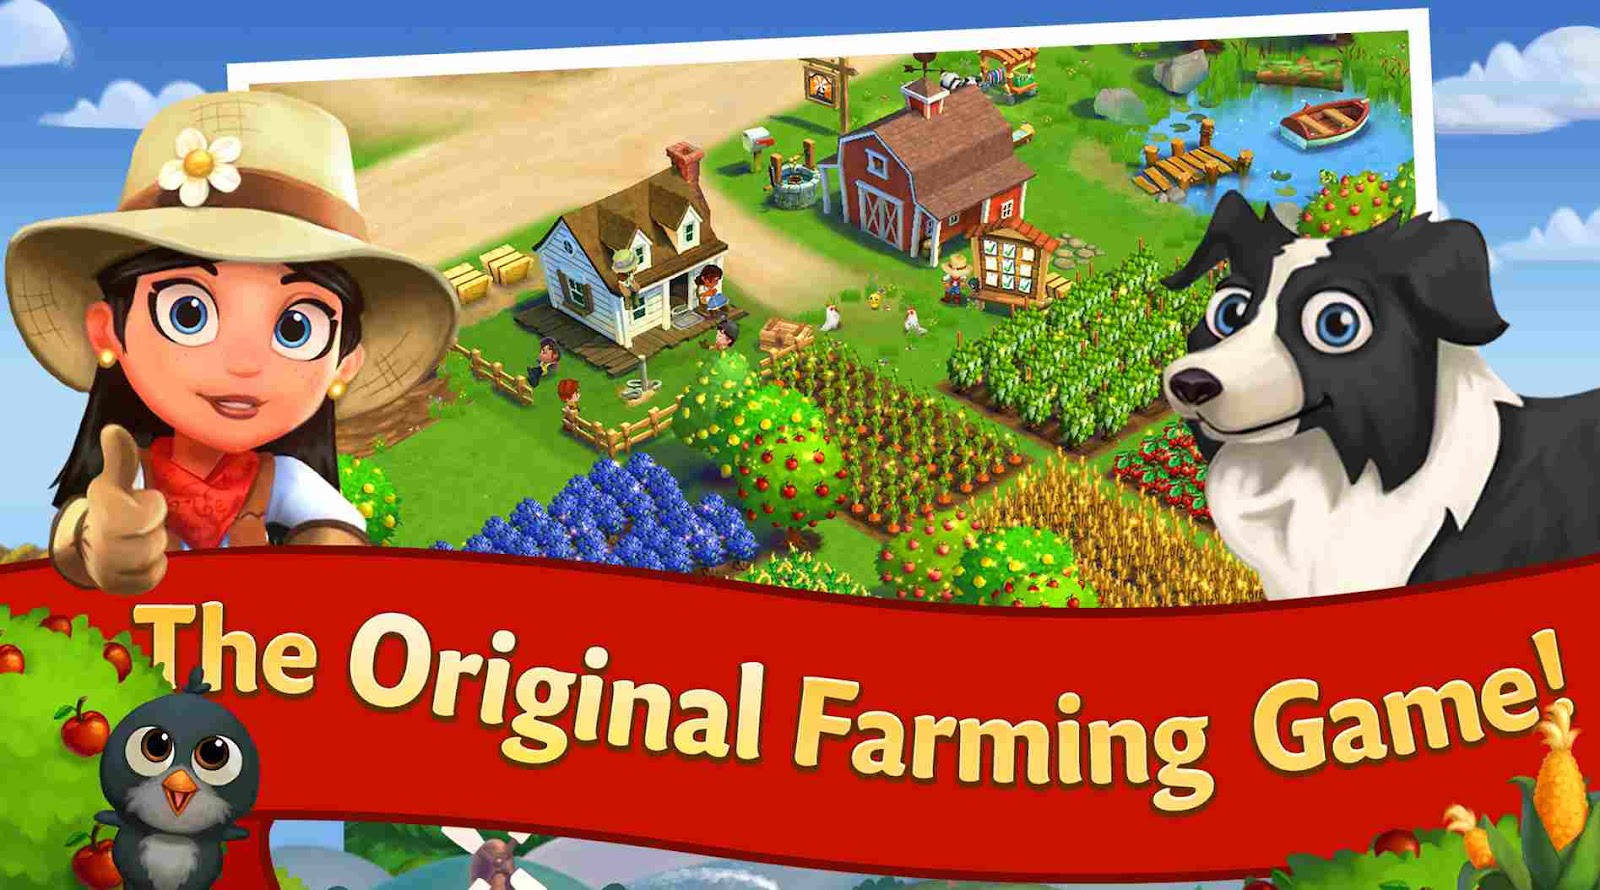 FarmVille 2: Country Escape MOD APK